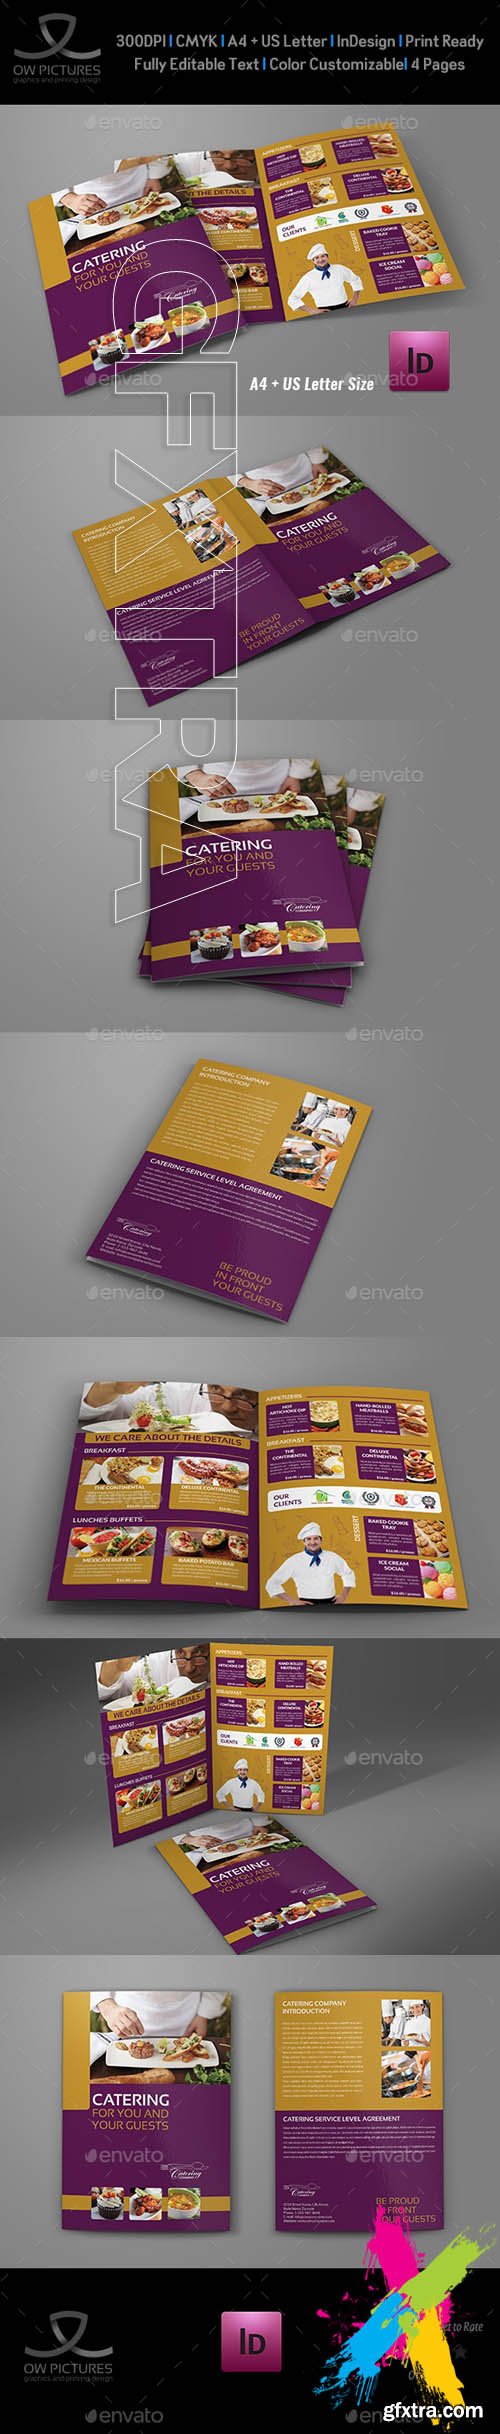 Graphicriver - Catering Bi-Fold Brochure Template 20268691